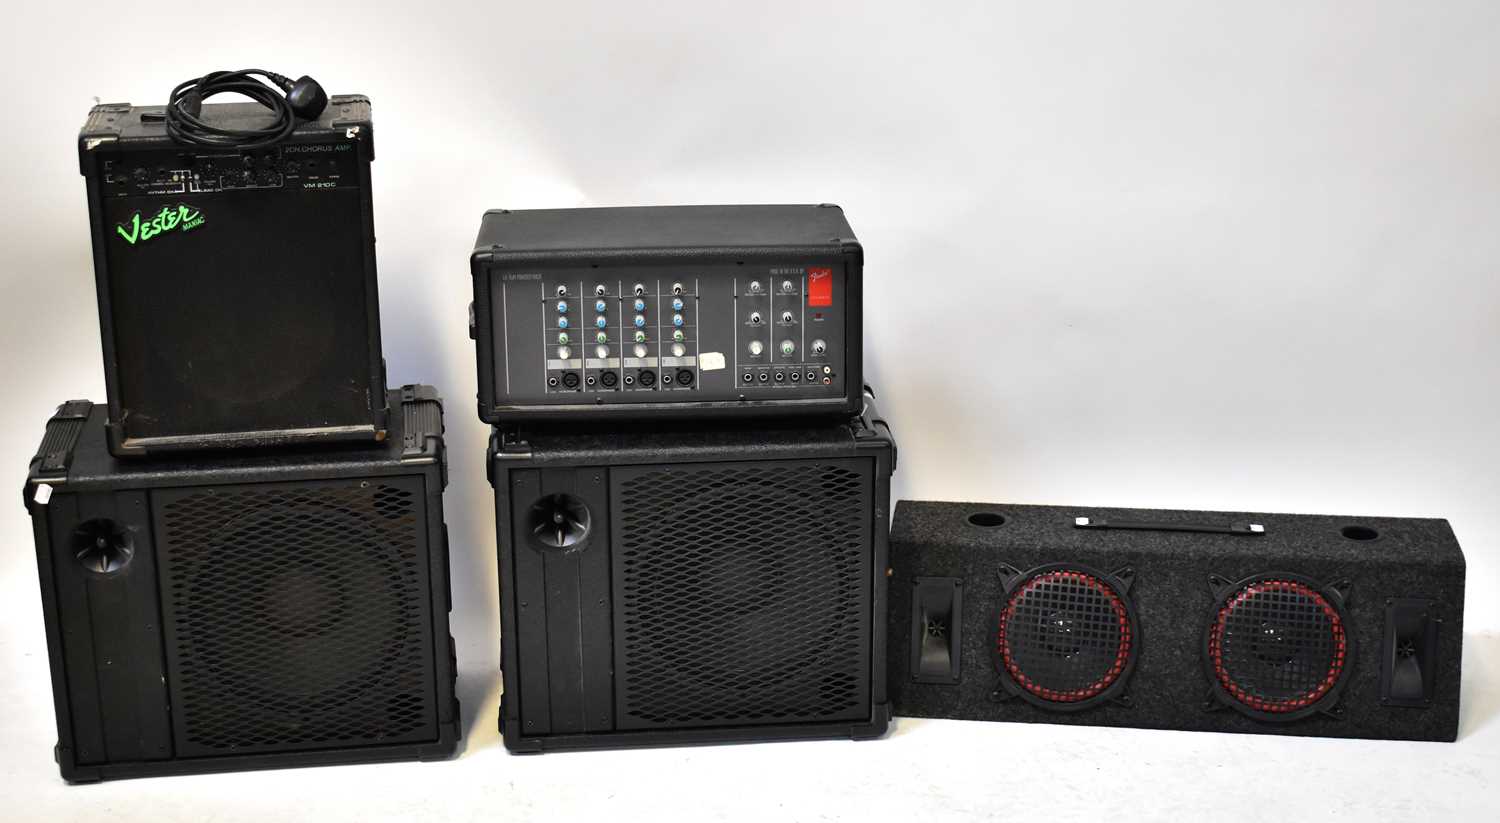 FENDER; an LX-1504 Powered Mixer, a Vester Maniac VM210C amplifier, an MB820 speaker and a pair of